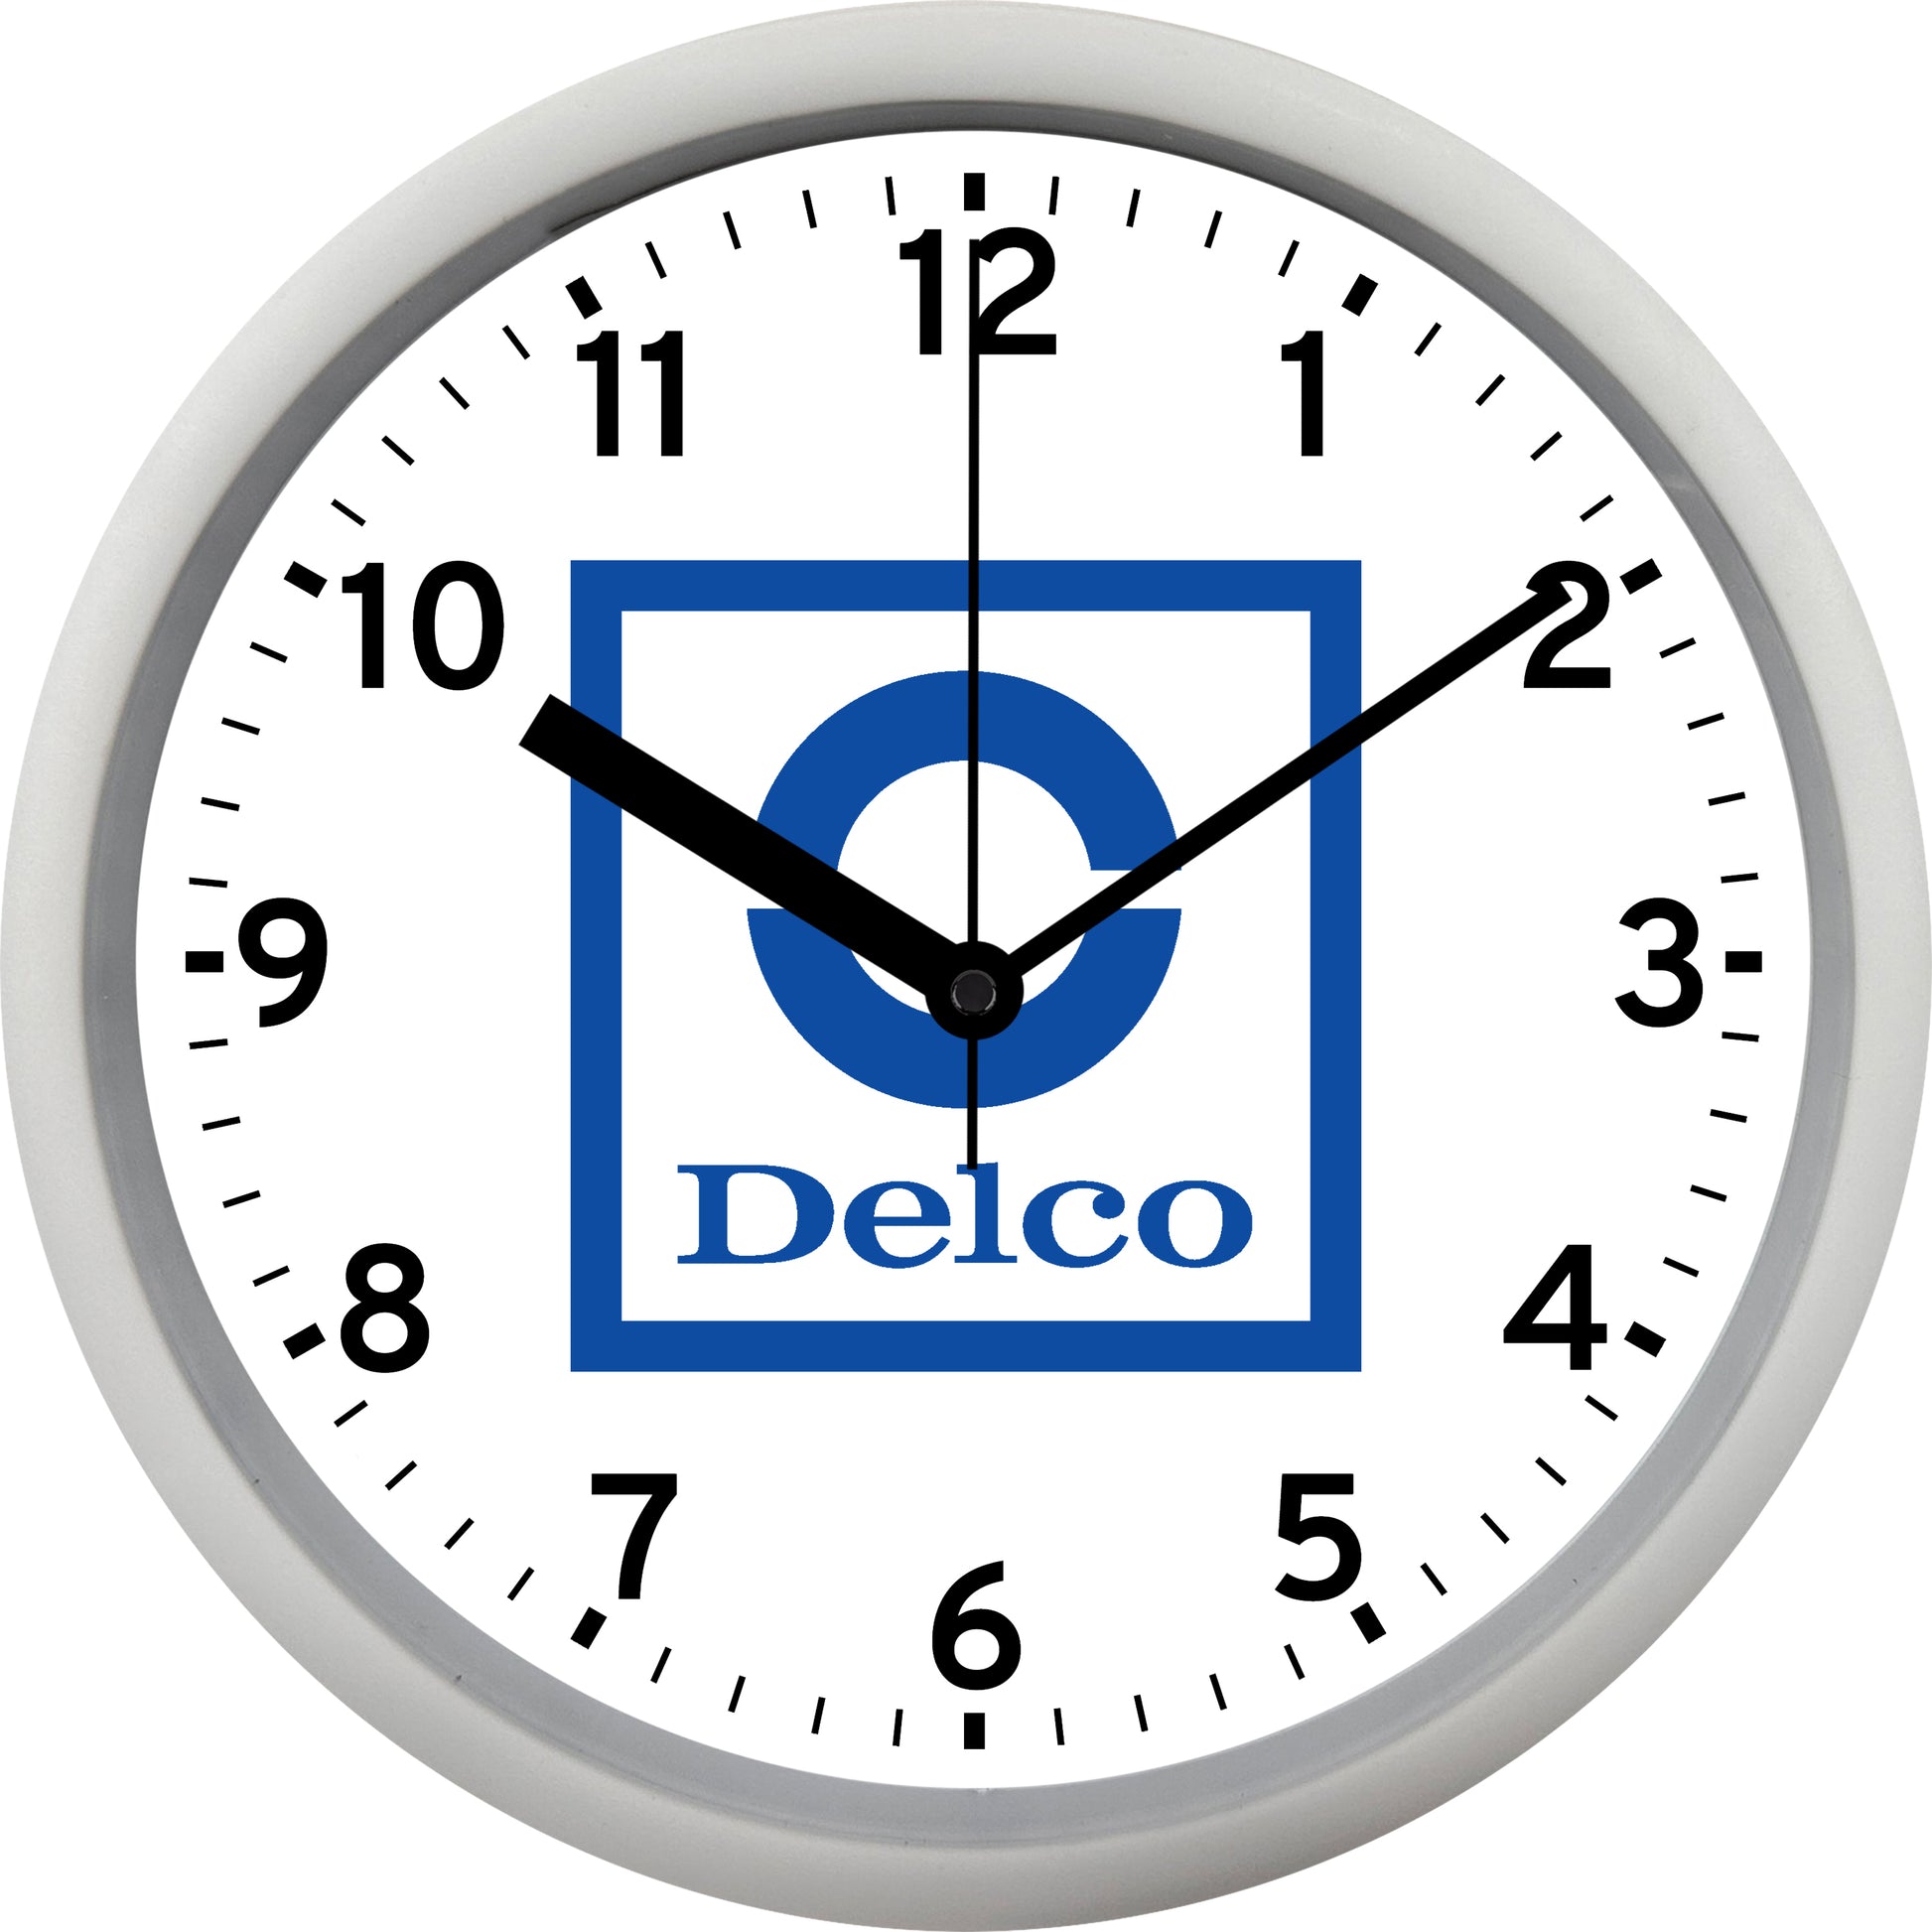 Delco Auto Parts Wall Clock